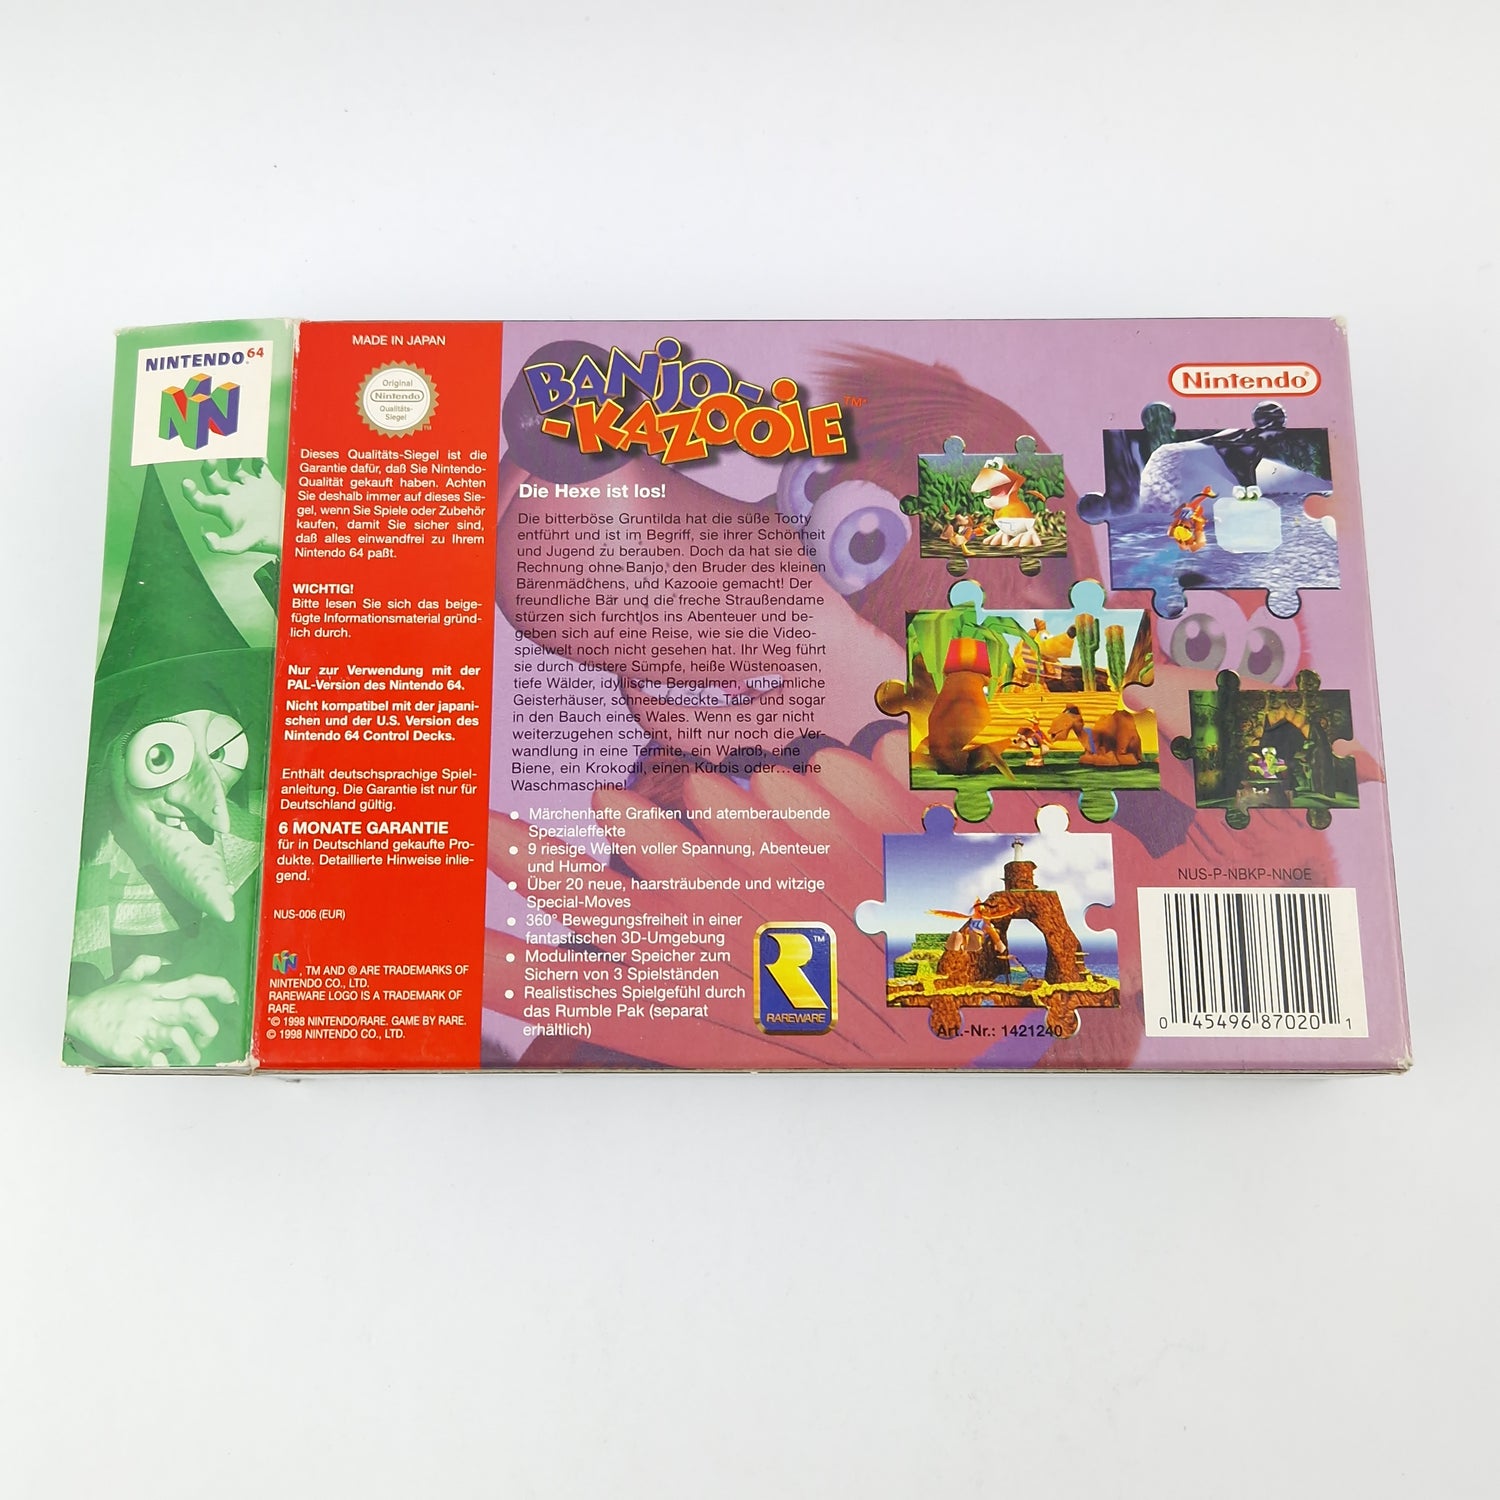 Nintendo 64 Game: Banjo Kazooie - Module Instructions OVP / PAL N64 Game